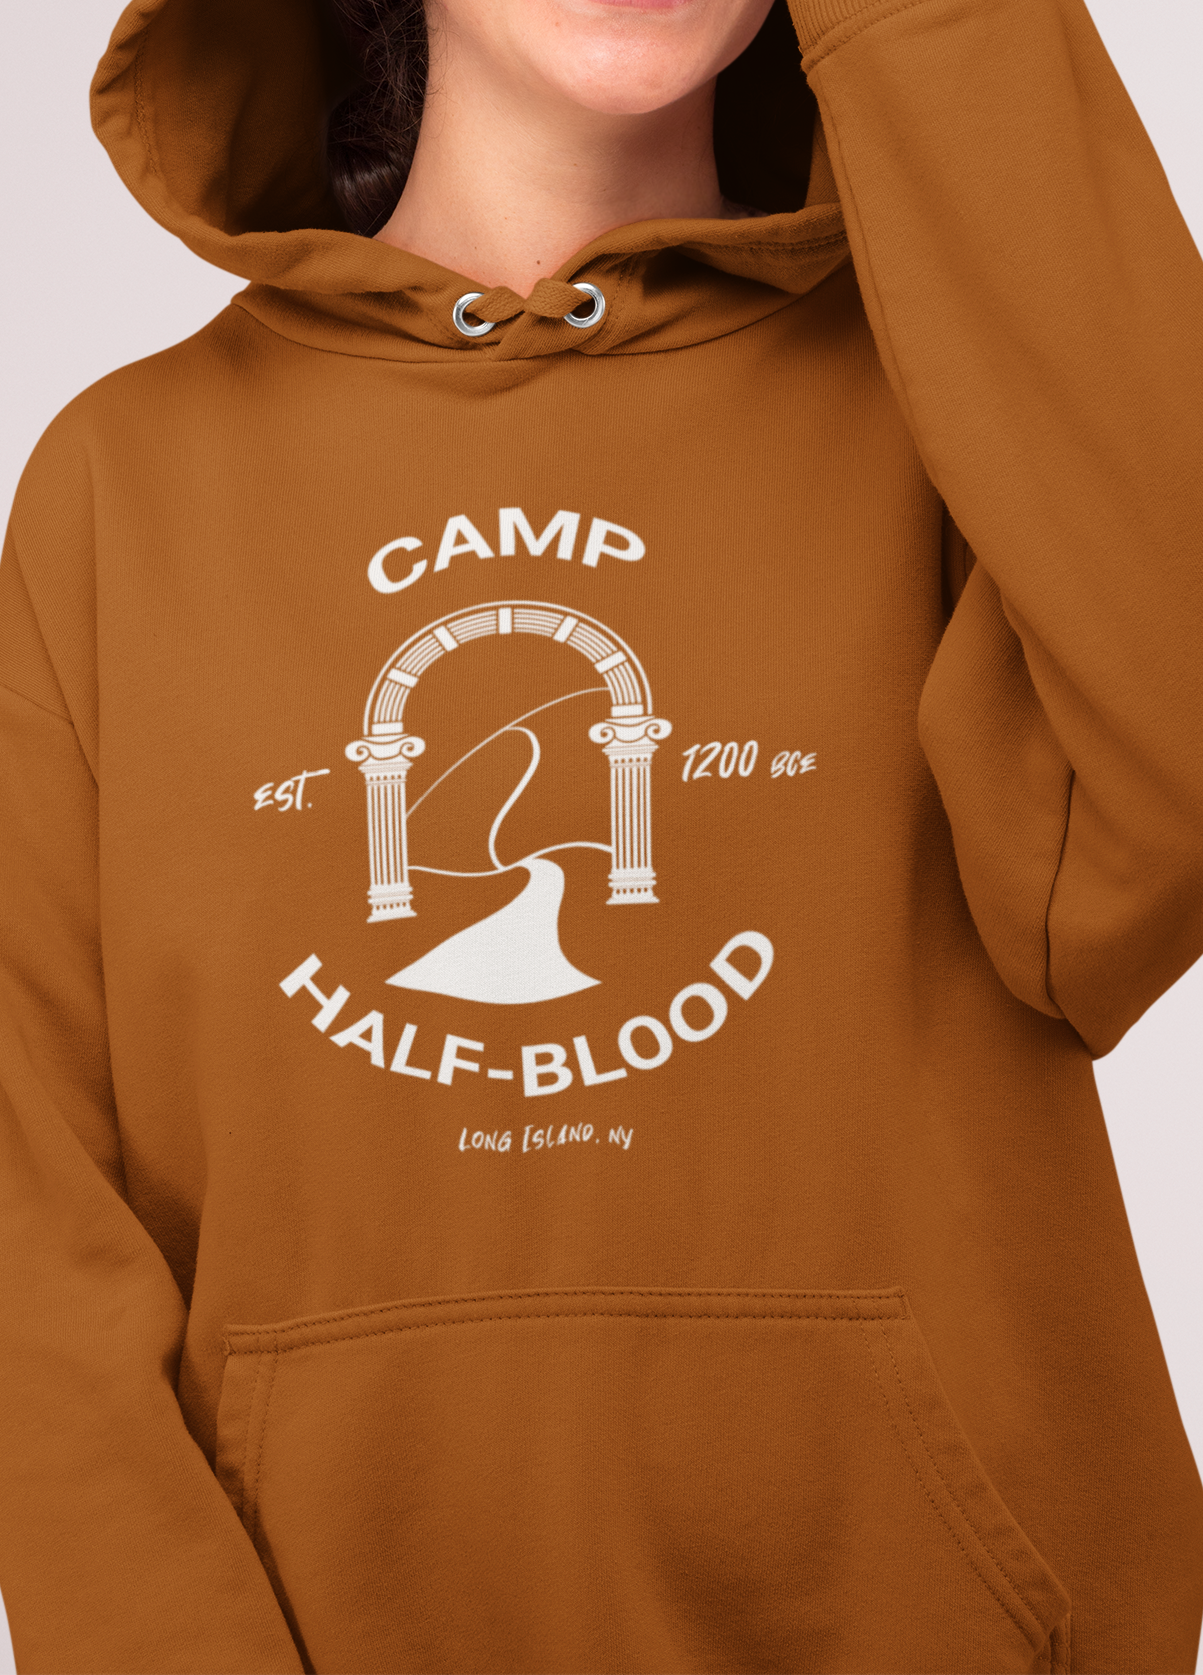 Camp Half-Blood Unisex Hooded Sweatshirt